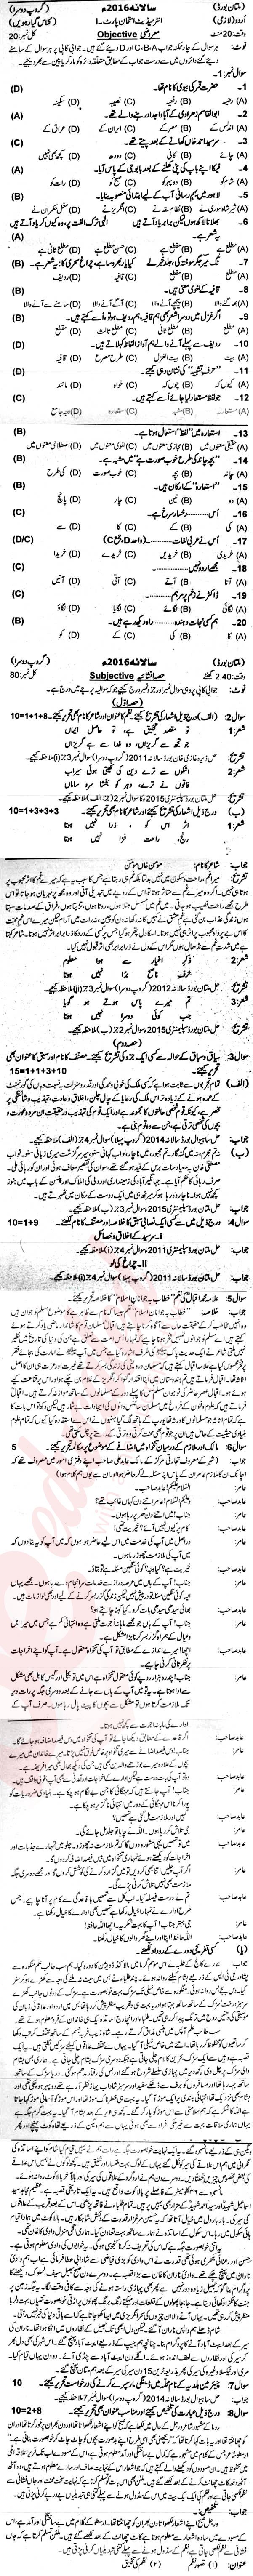 Urdu 11th class Past Paper Group 2 BISE Multan 2016